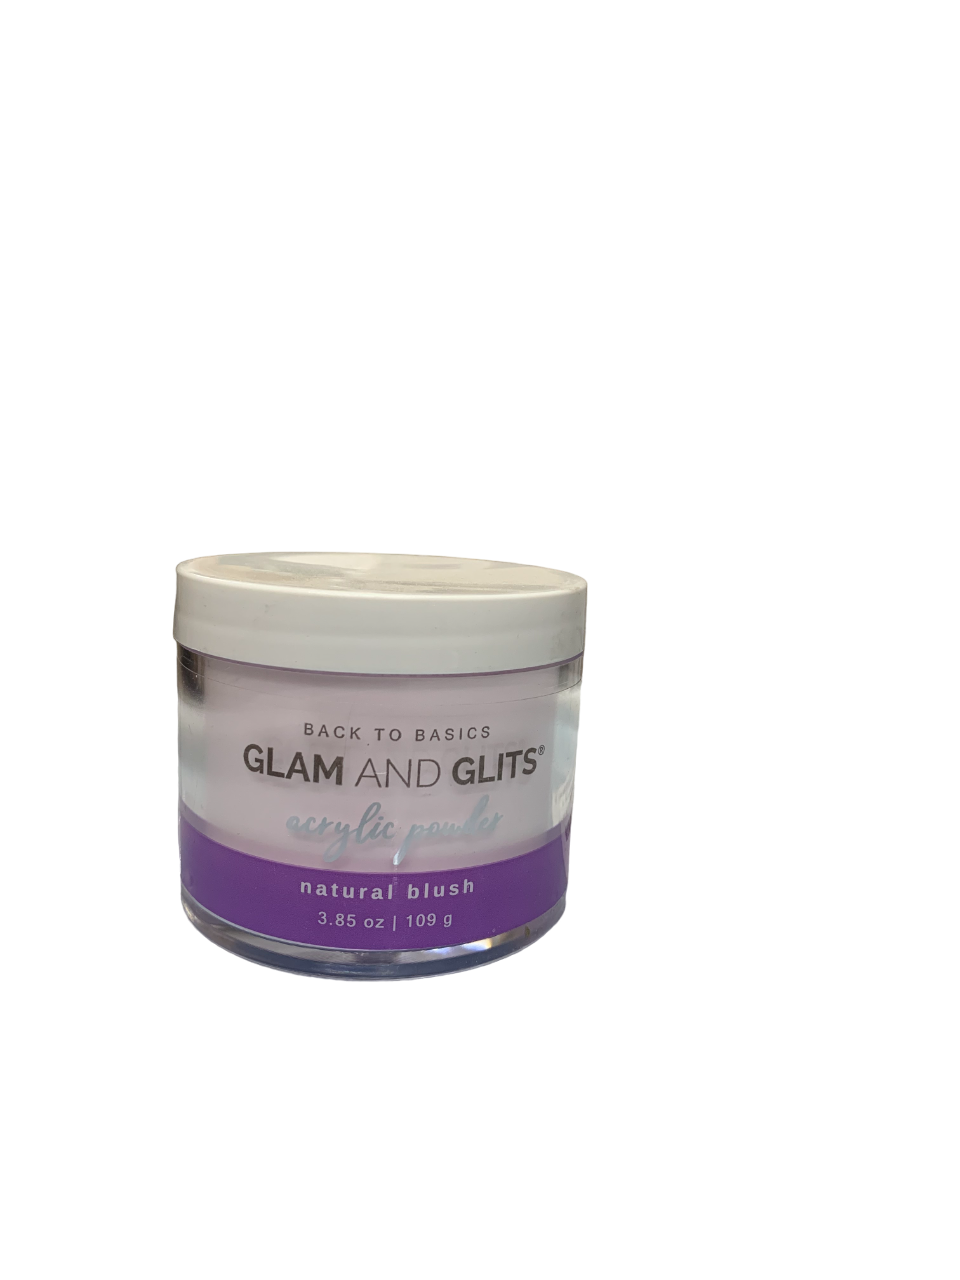 Glam and Glits Acrylic Powder - GLGLNB - Natural Blush